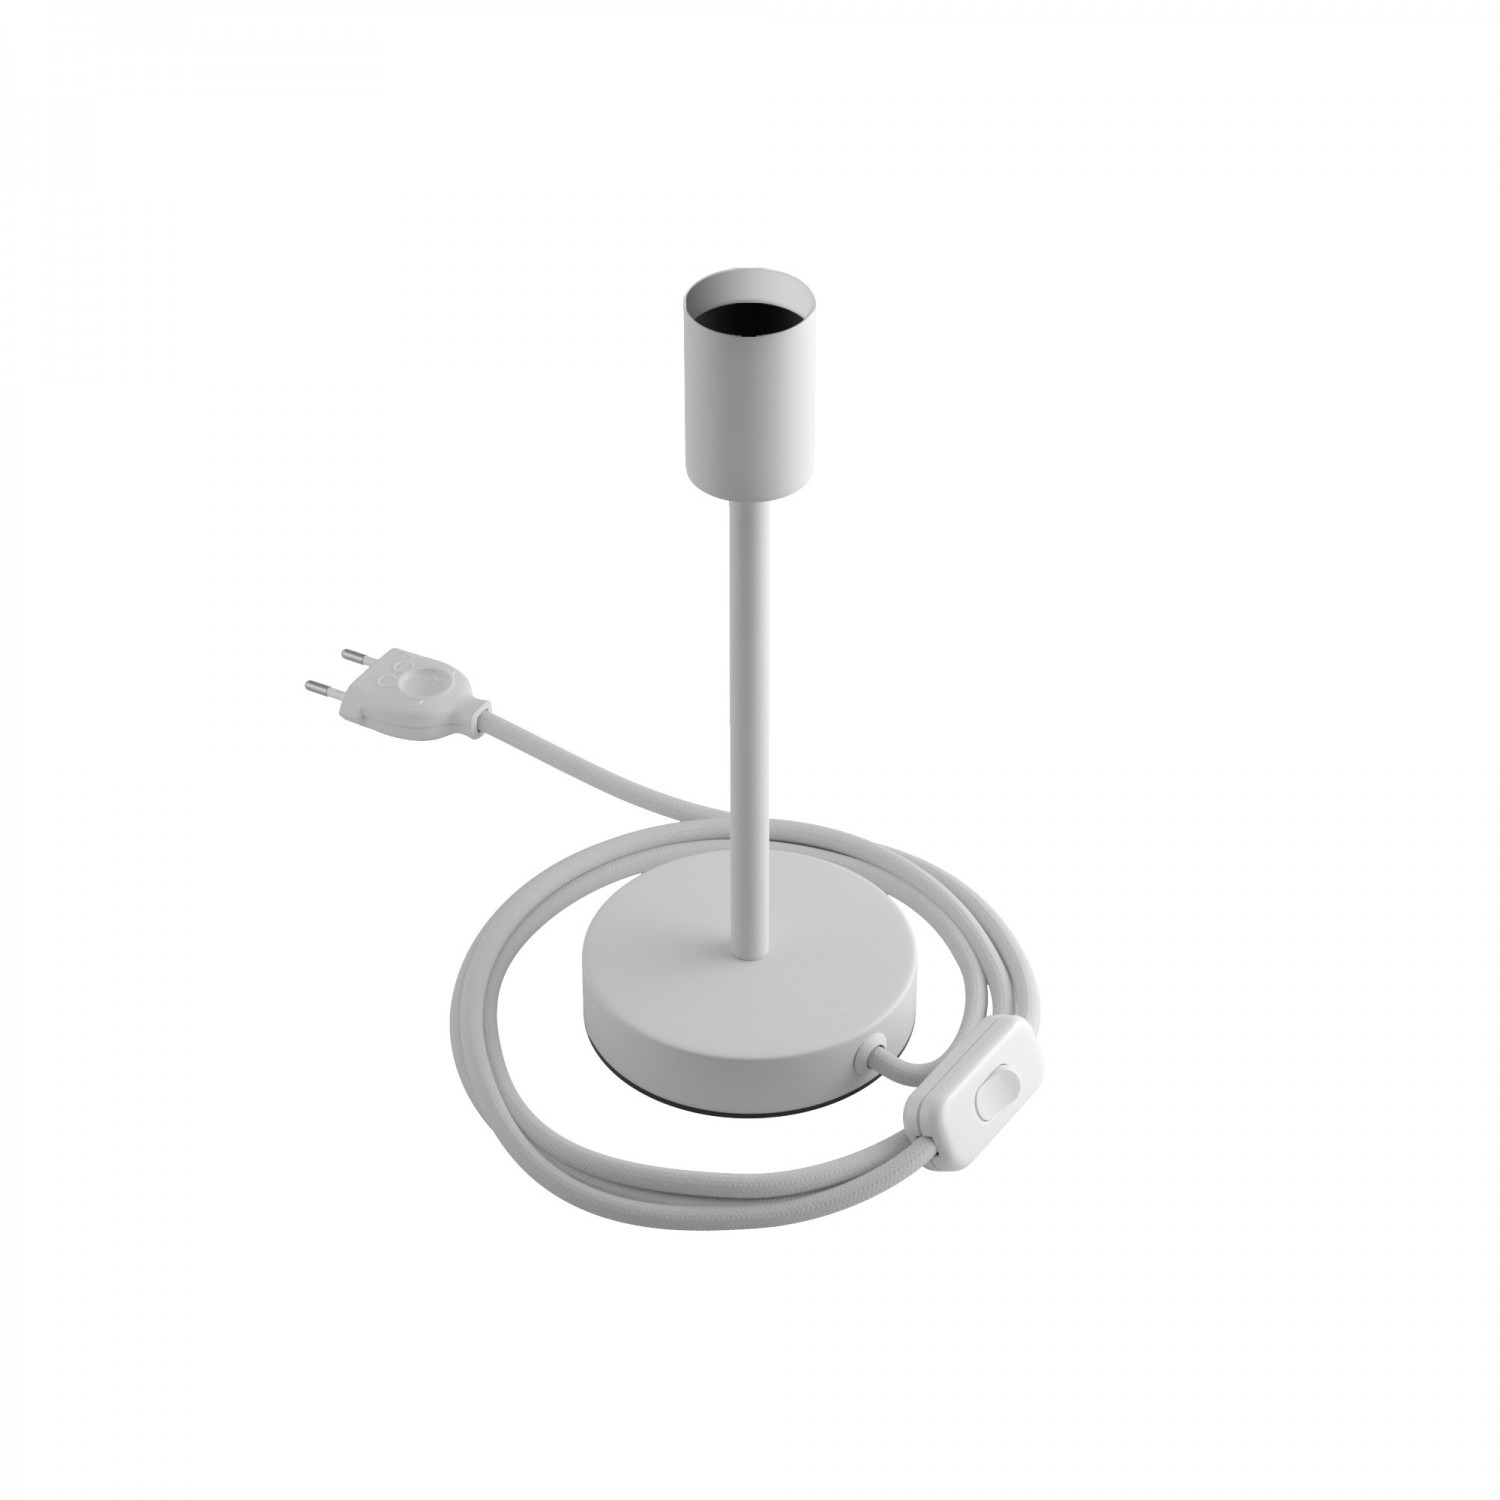 Alzaluce - Metal table lamp with two-pin plug